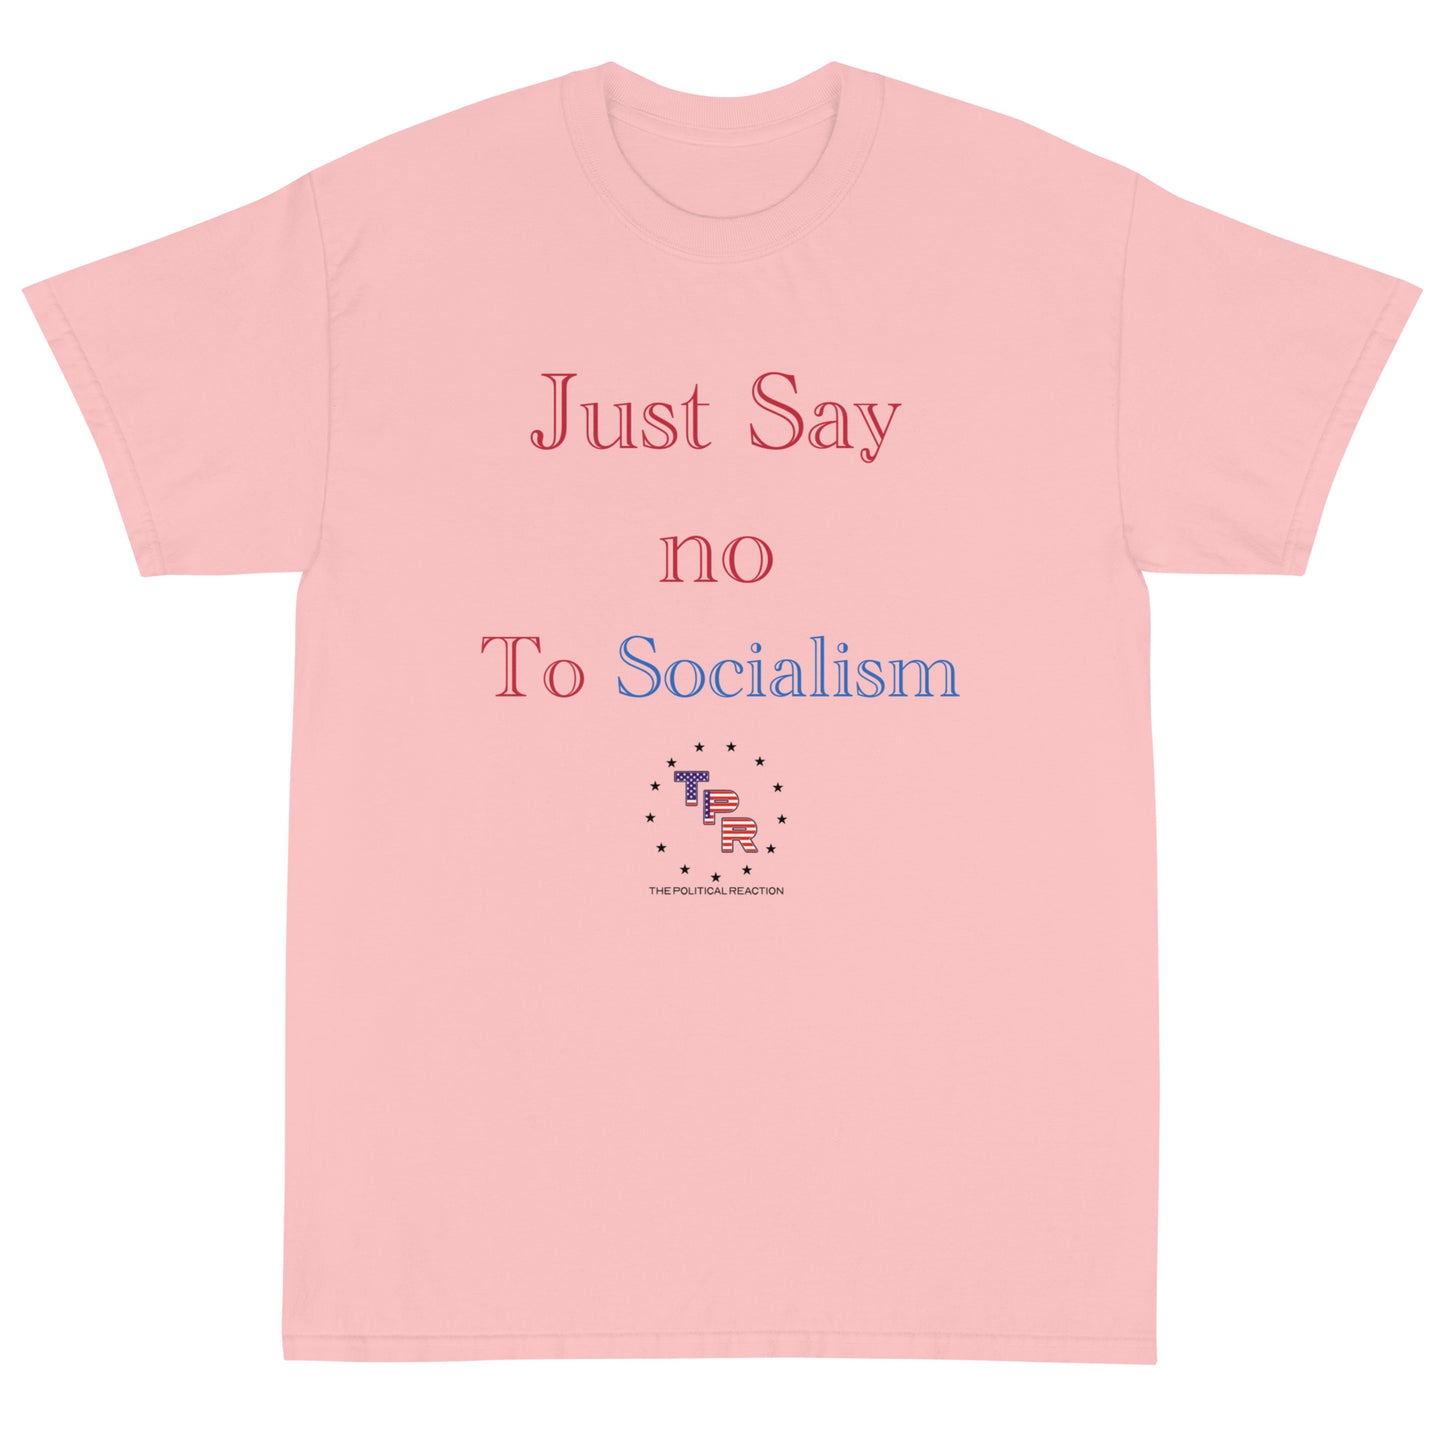 Just-say-no-to-socialism-t-shirt-pink